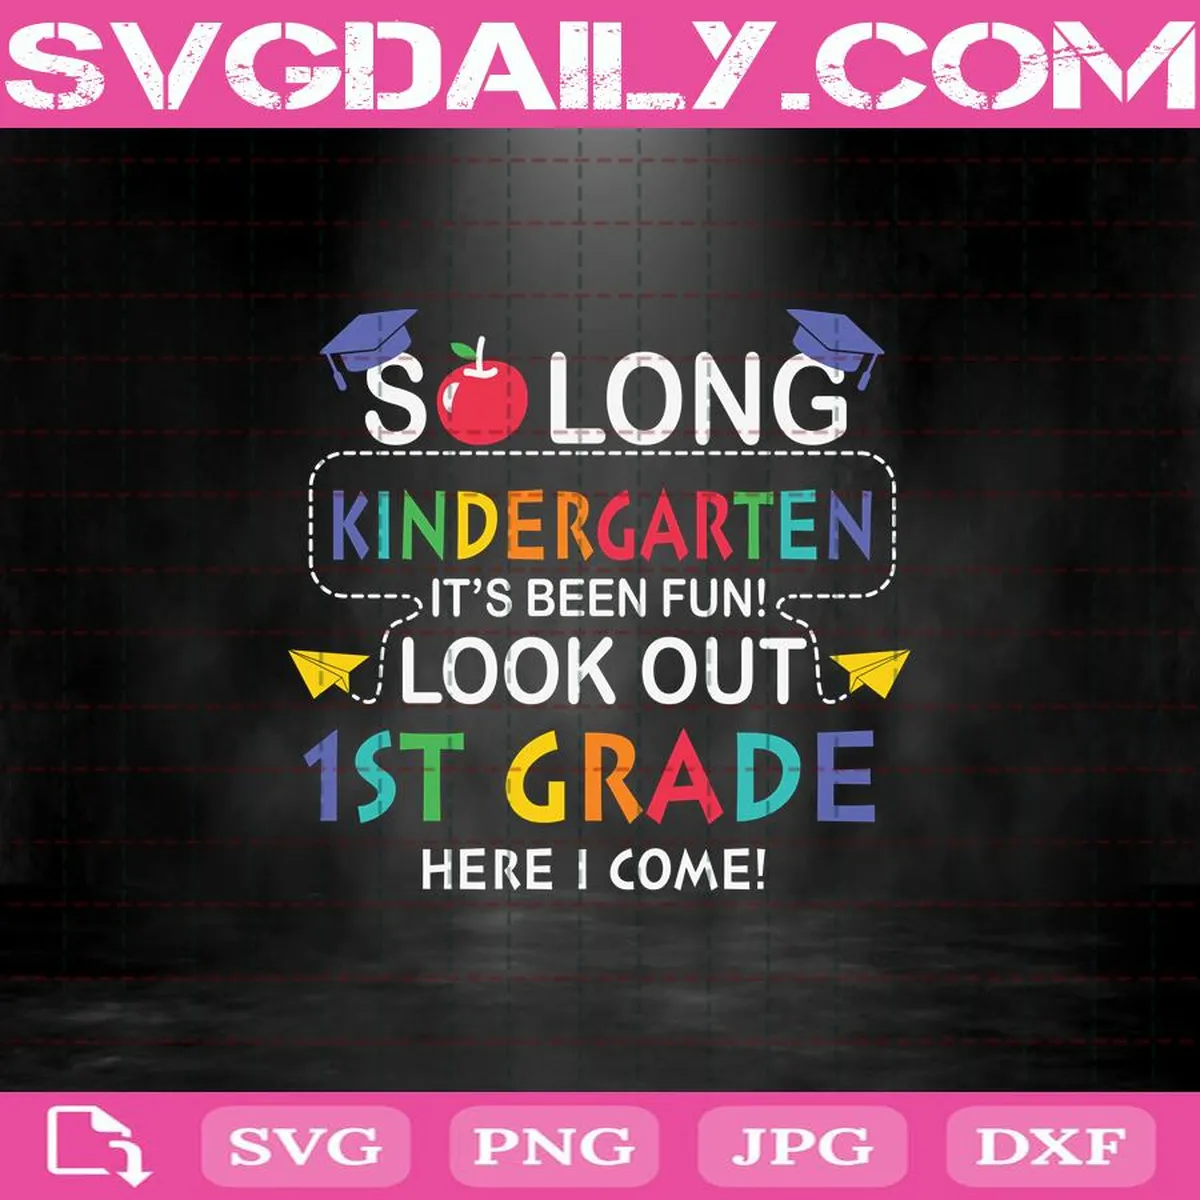 So Long Kindergarten It's Been Fun Look Out 1st Grade Here I Come Svg, Kindergarten Svg, 1St Grade Svg, Graduate Svg